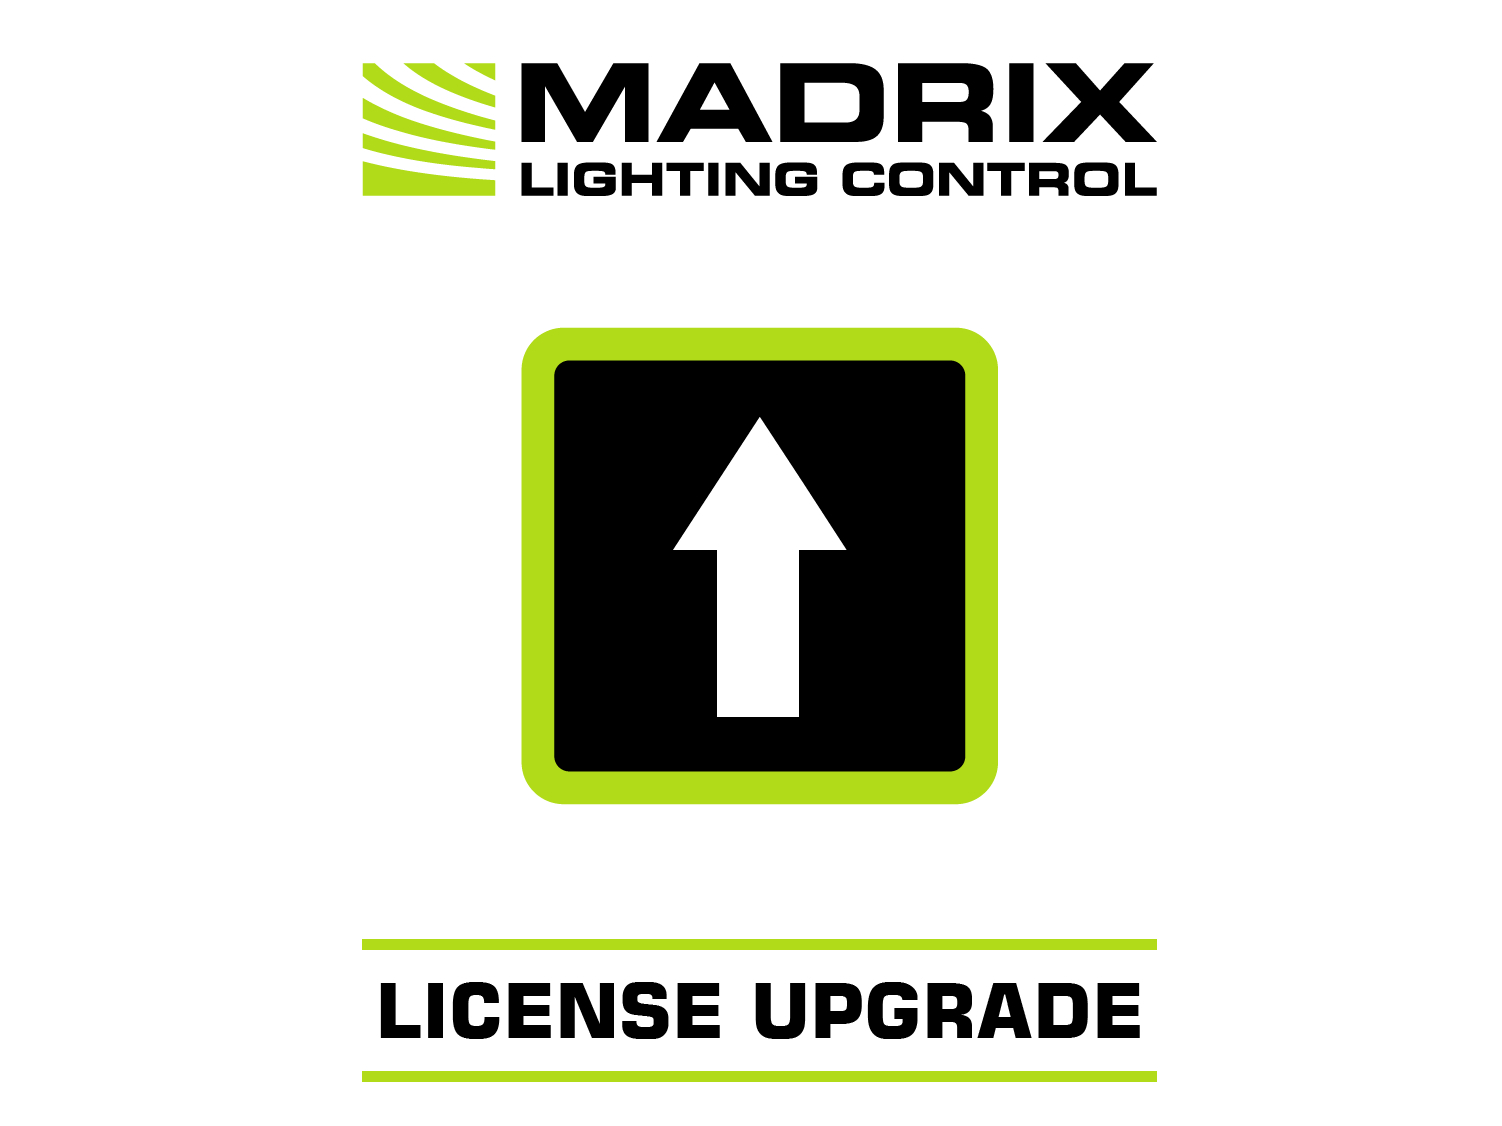 MADRIX UPGRADE entry -> maximum